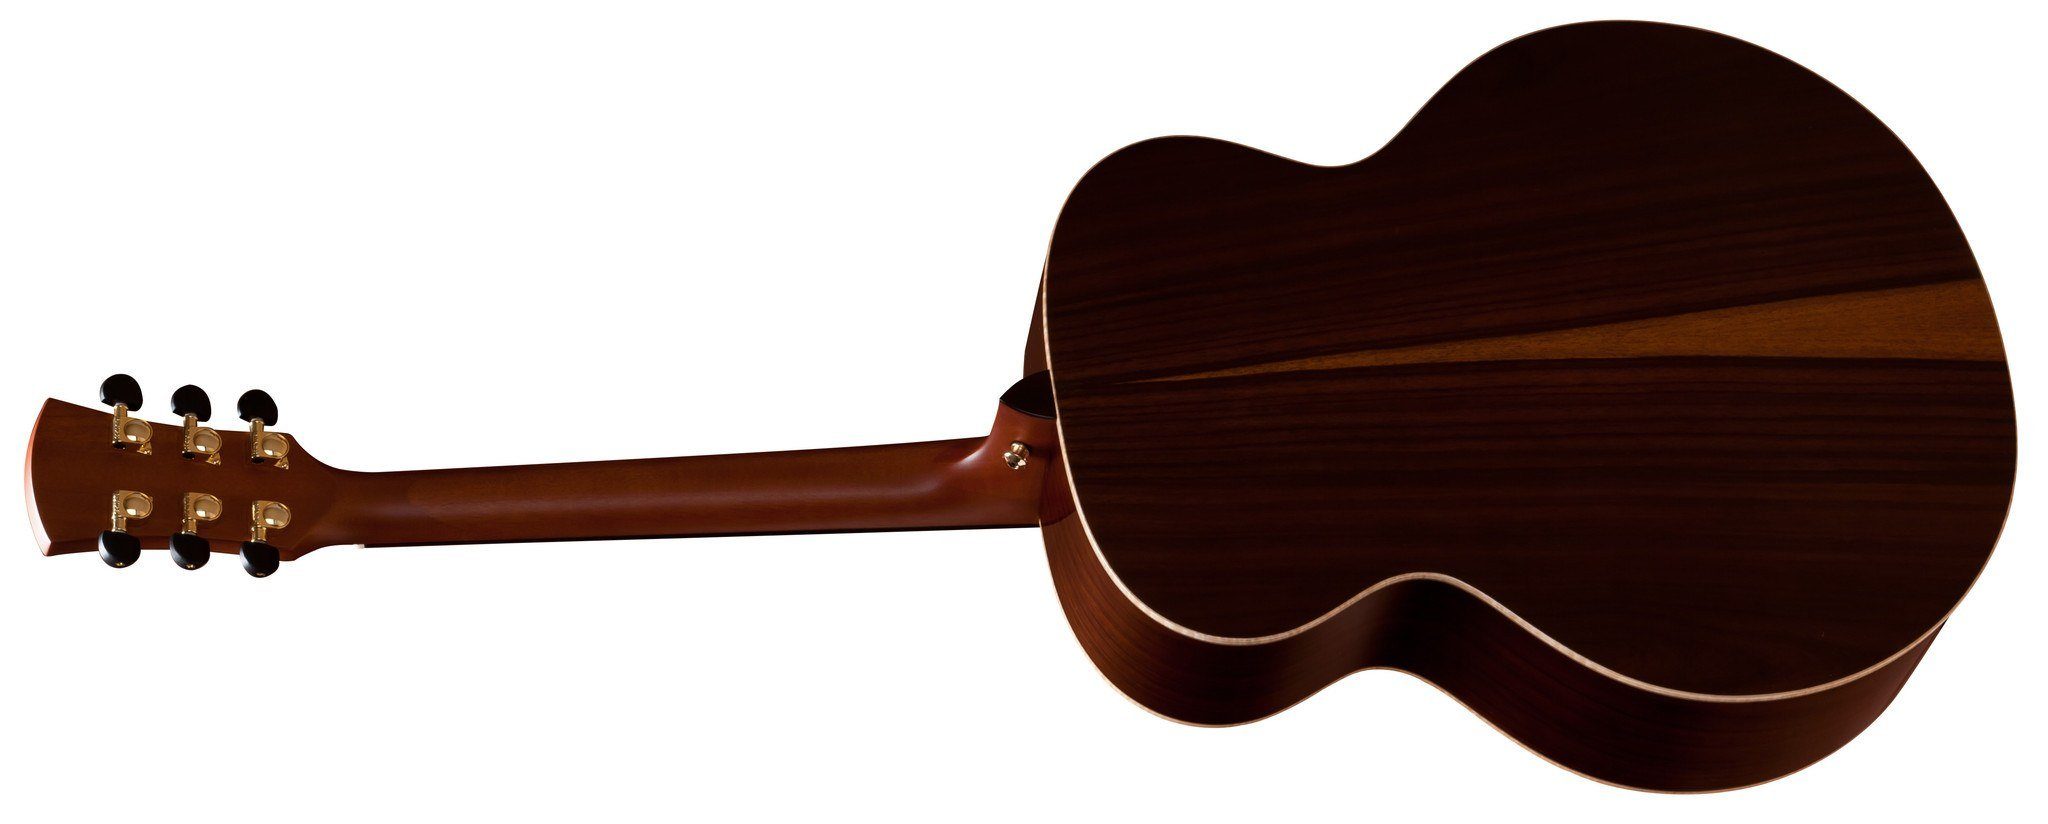 Faith FJHG Acoustic Guitar (Jupiter HiGloss), Acoustic Guitar for sale at Richards Guitars.